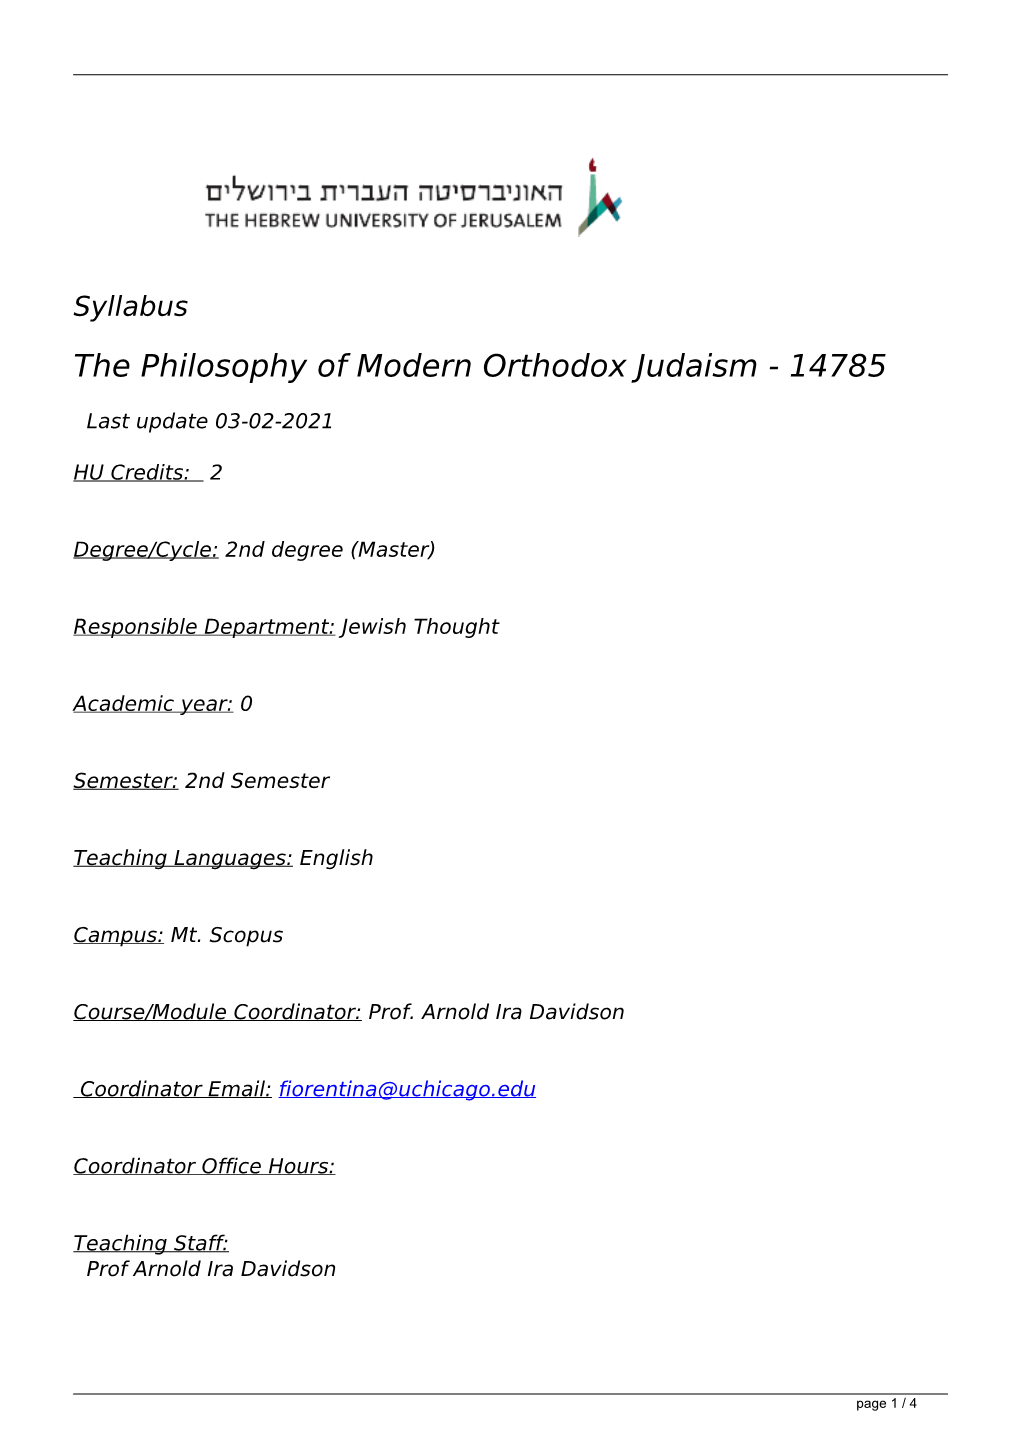 The Philosophy of Modern Orthodox Judaism - 14785